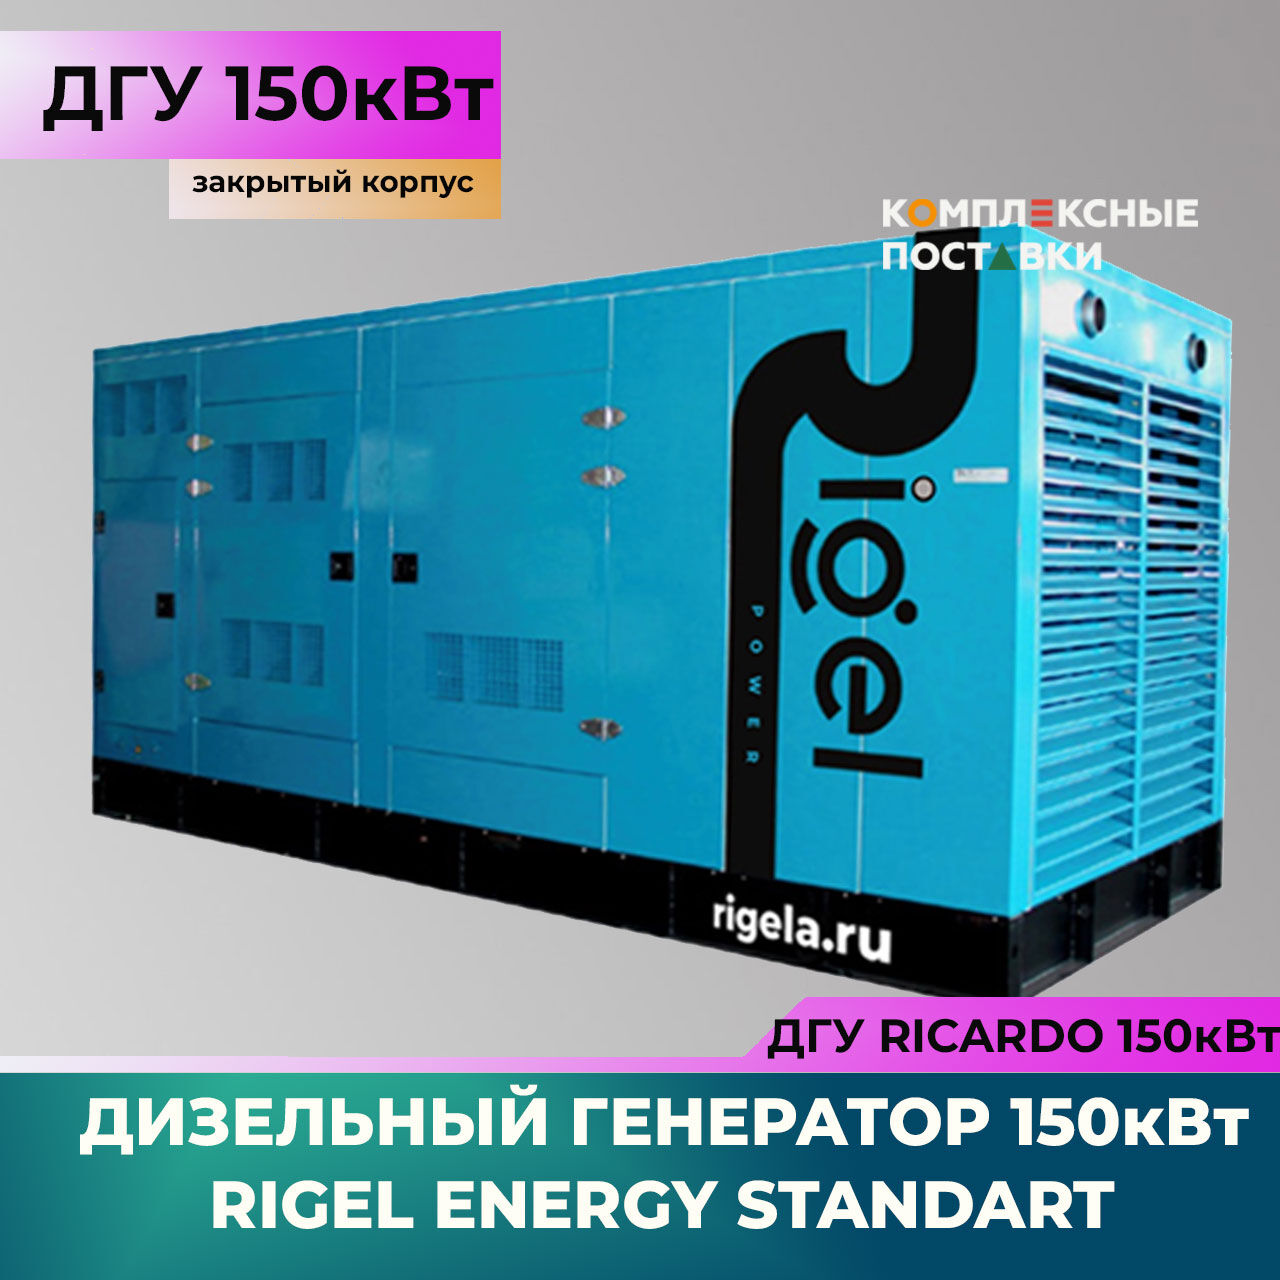 ДГУ 150кВт Ricardo R Дизельный генератор Rigel Energy Standard RES 150 (150 кВт, Ricardo R) закрытый